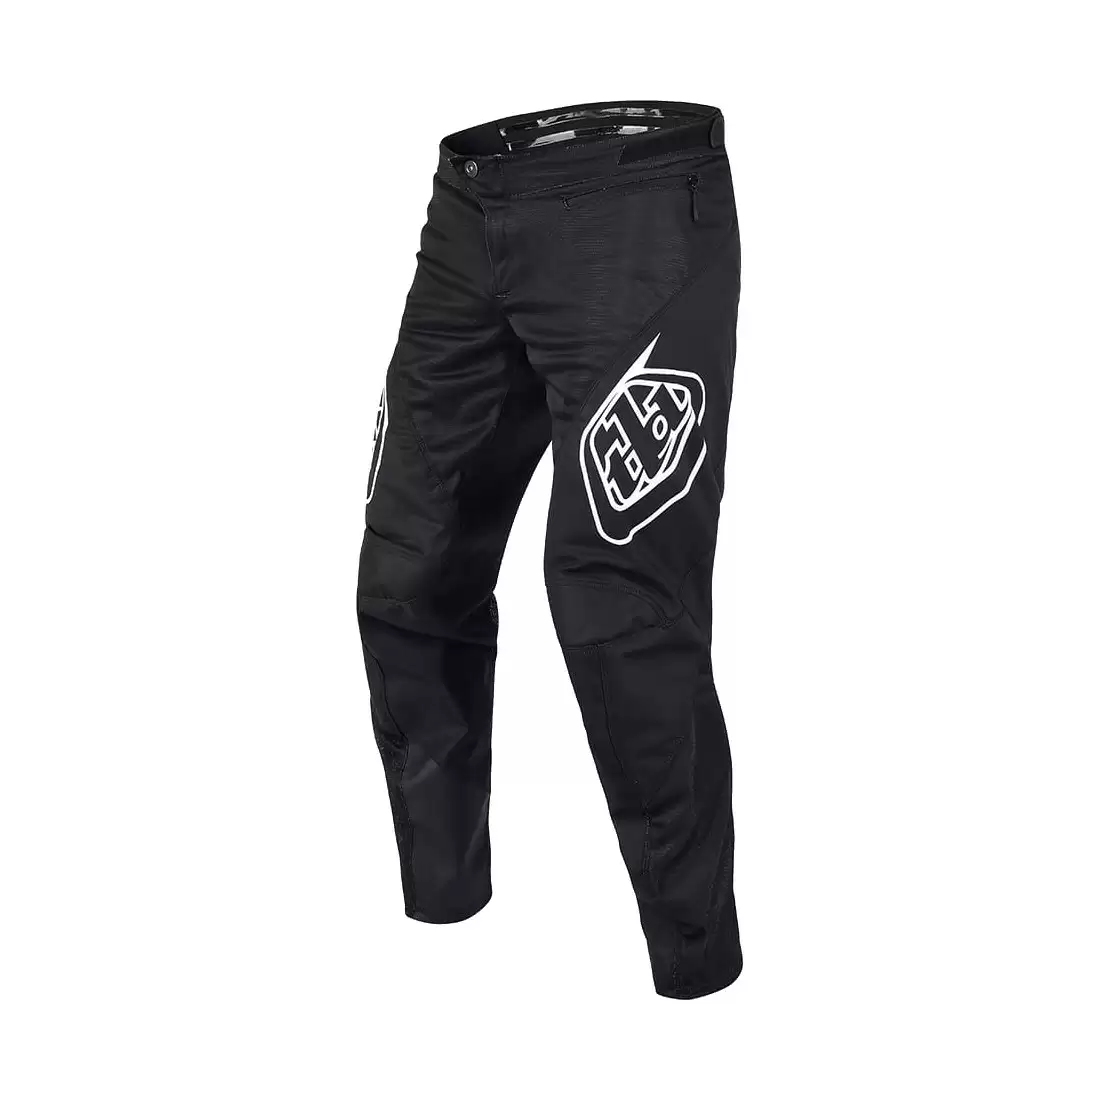 DH/Enduro Sprint MTB Long Pants Black Size M - image